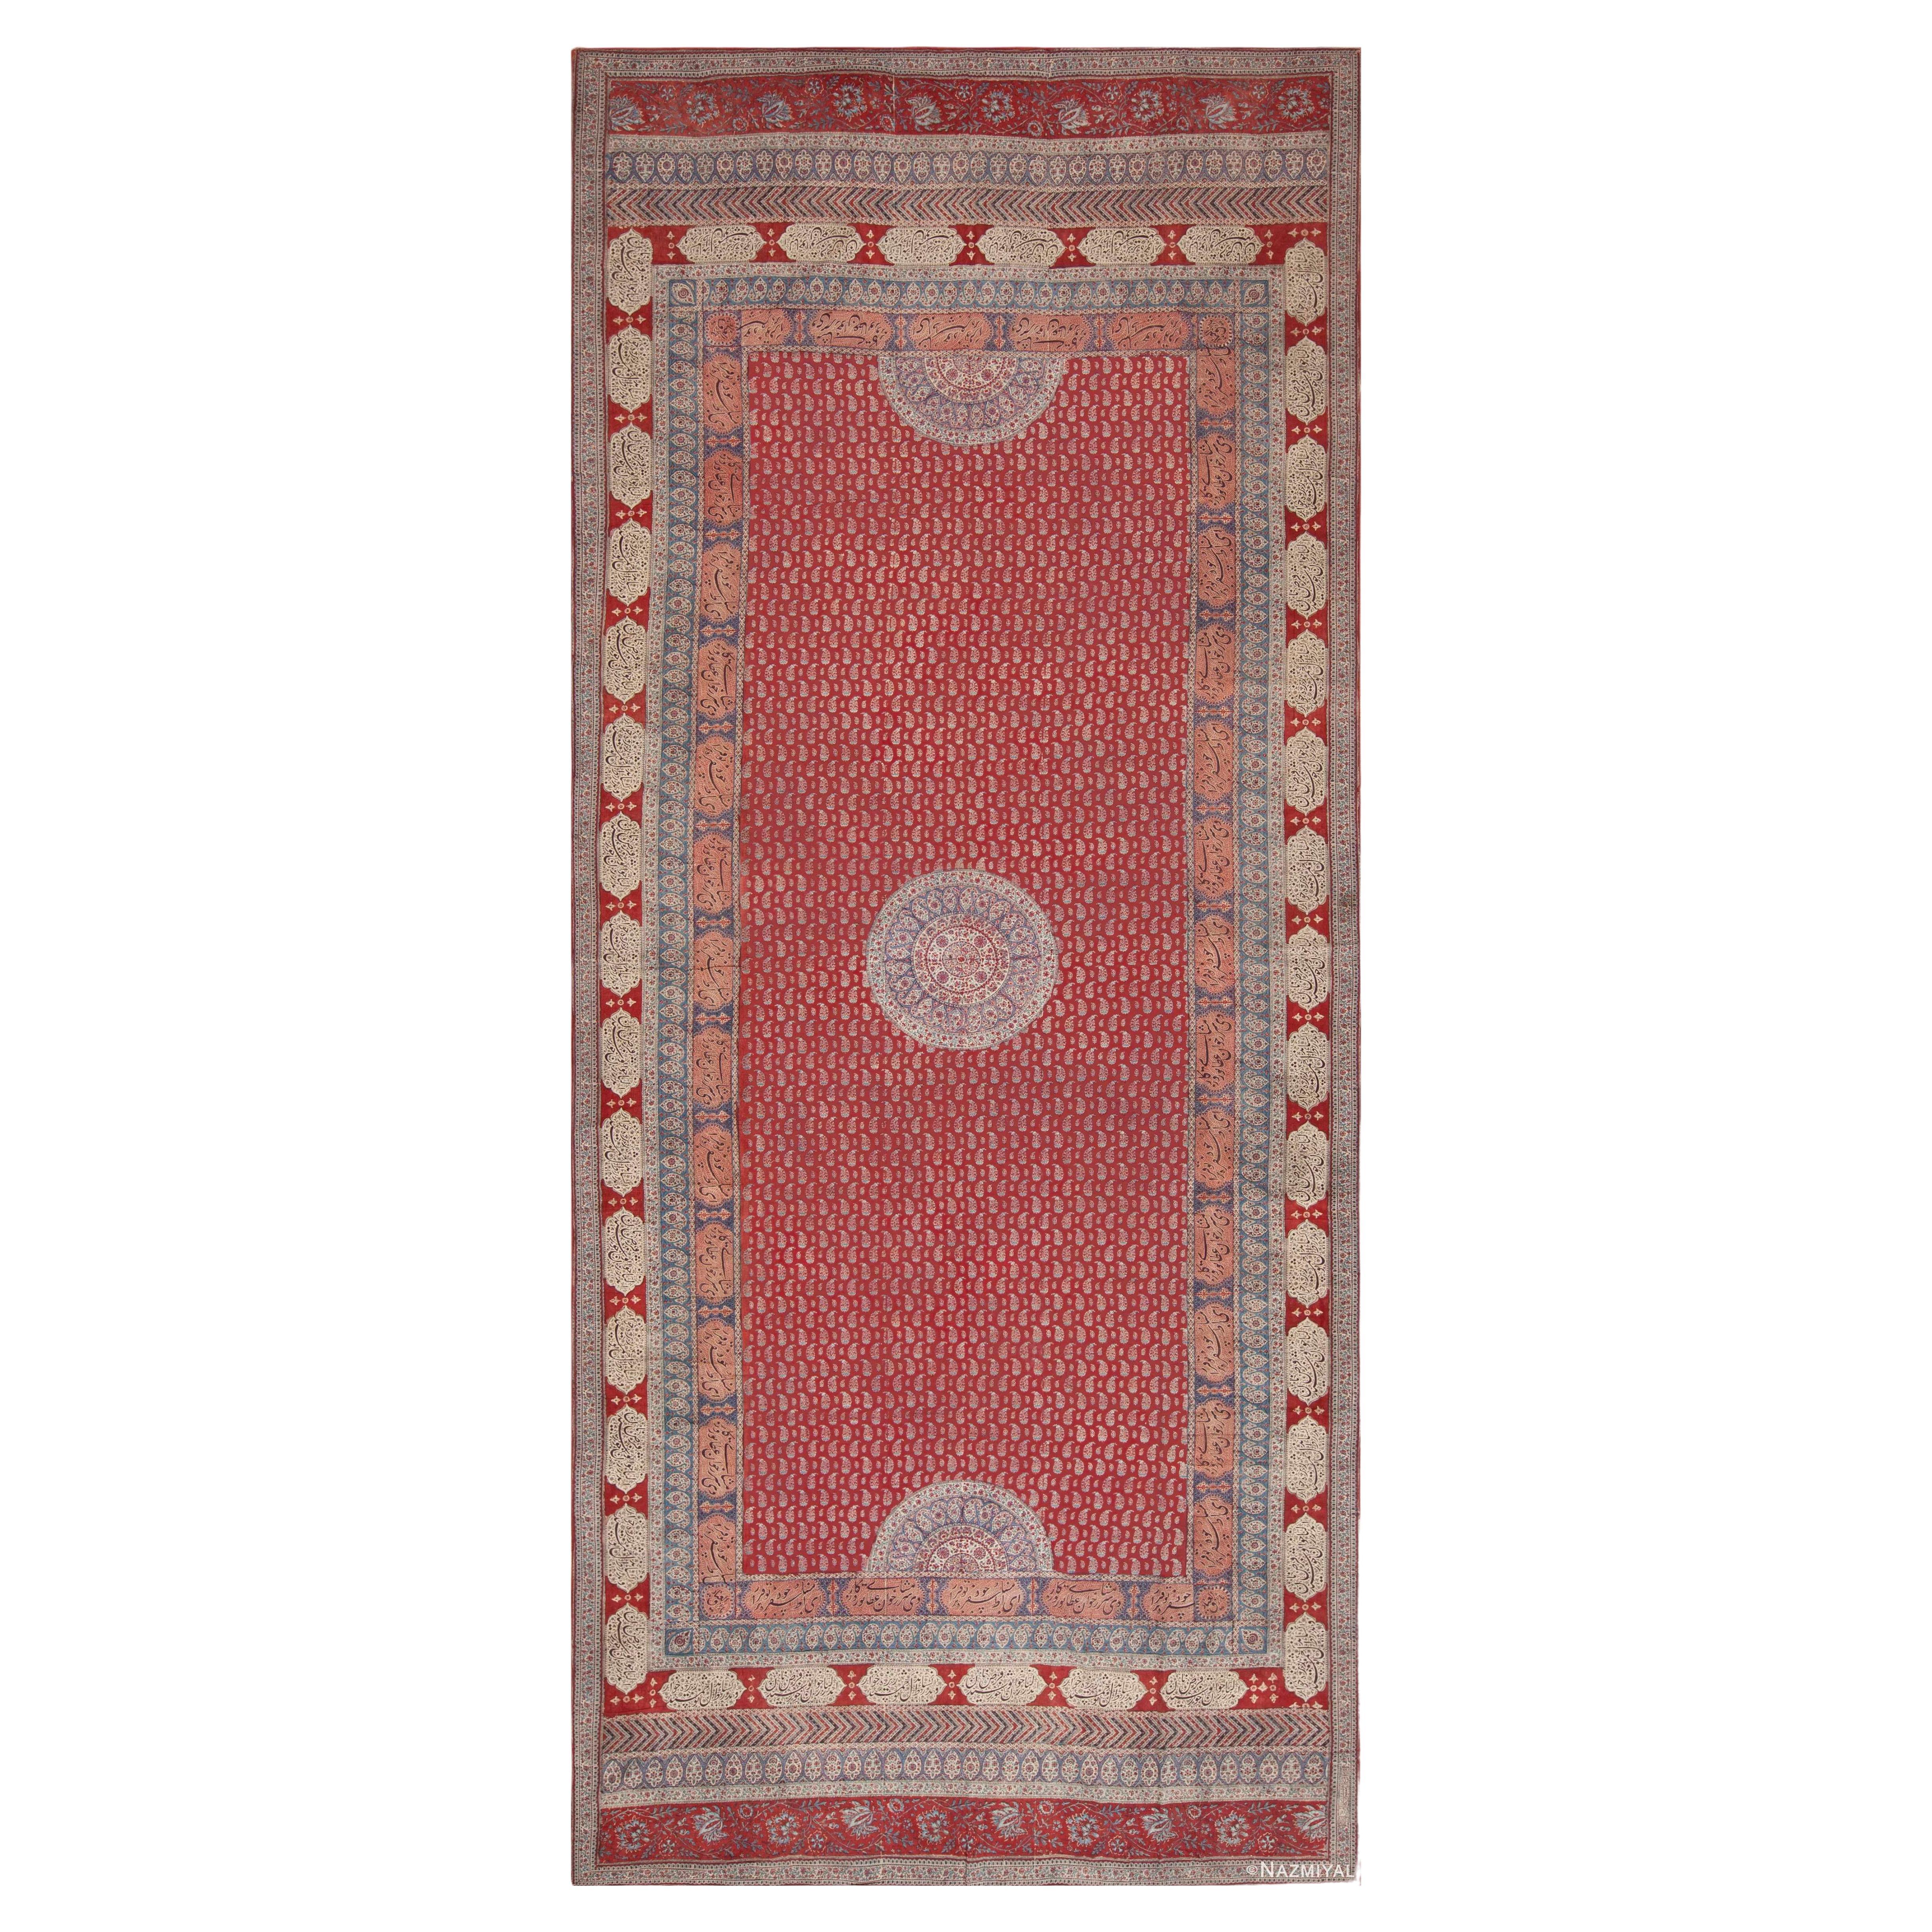 Antique Persian Khorassan Paisley Kalamkari / Qalamkari Textile  6'3" x 14'10" For Sale